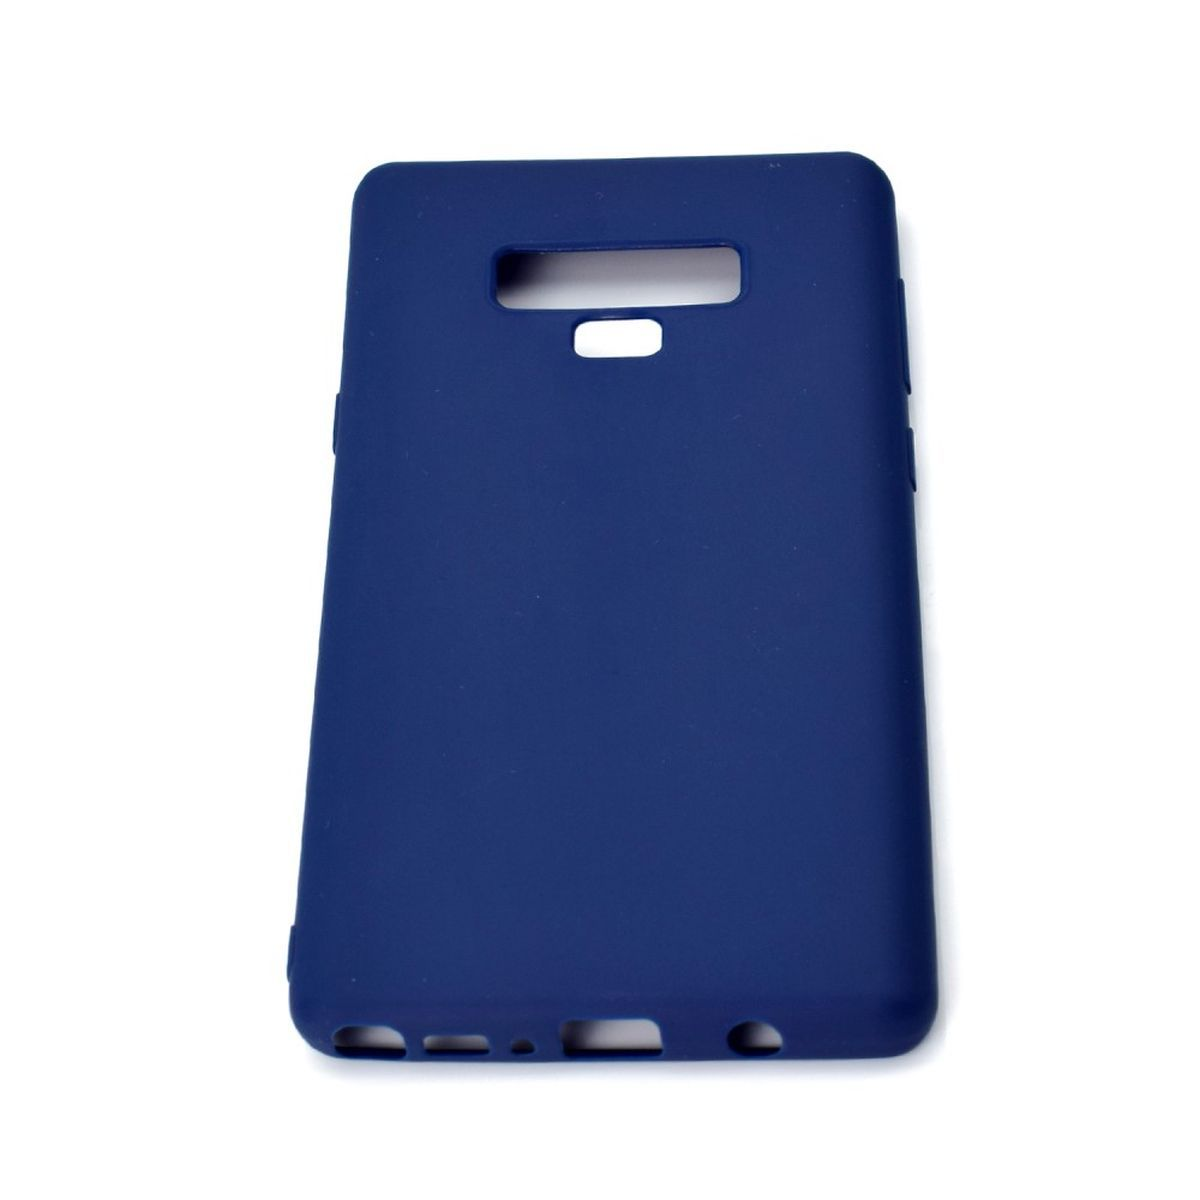 aus Note Galaxy Samsung, Handycase Blau 9, Silikon, Backcover, COVERKINGZ